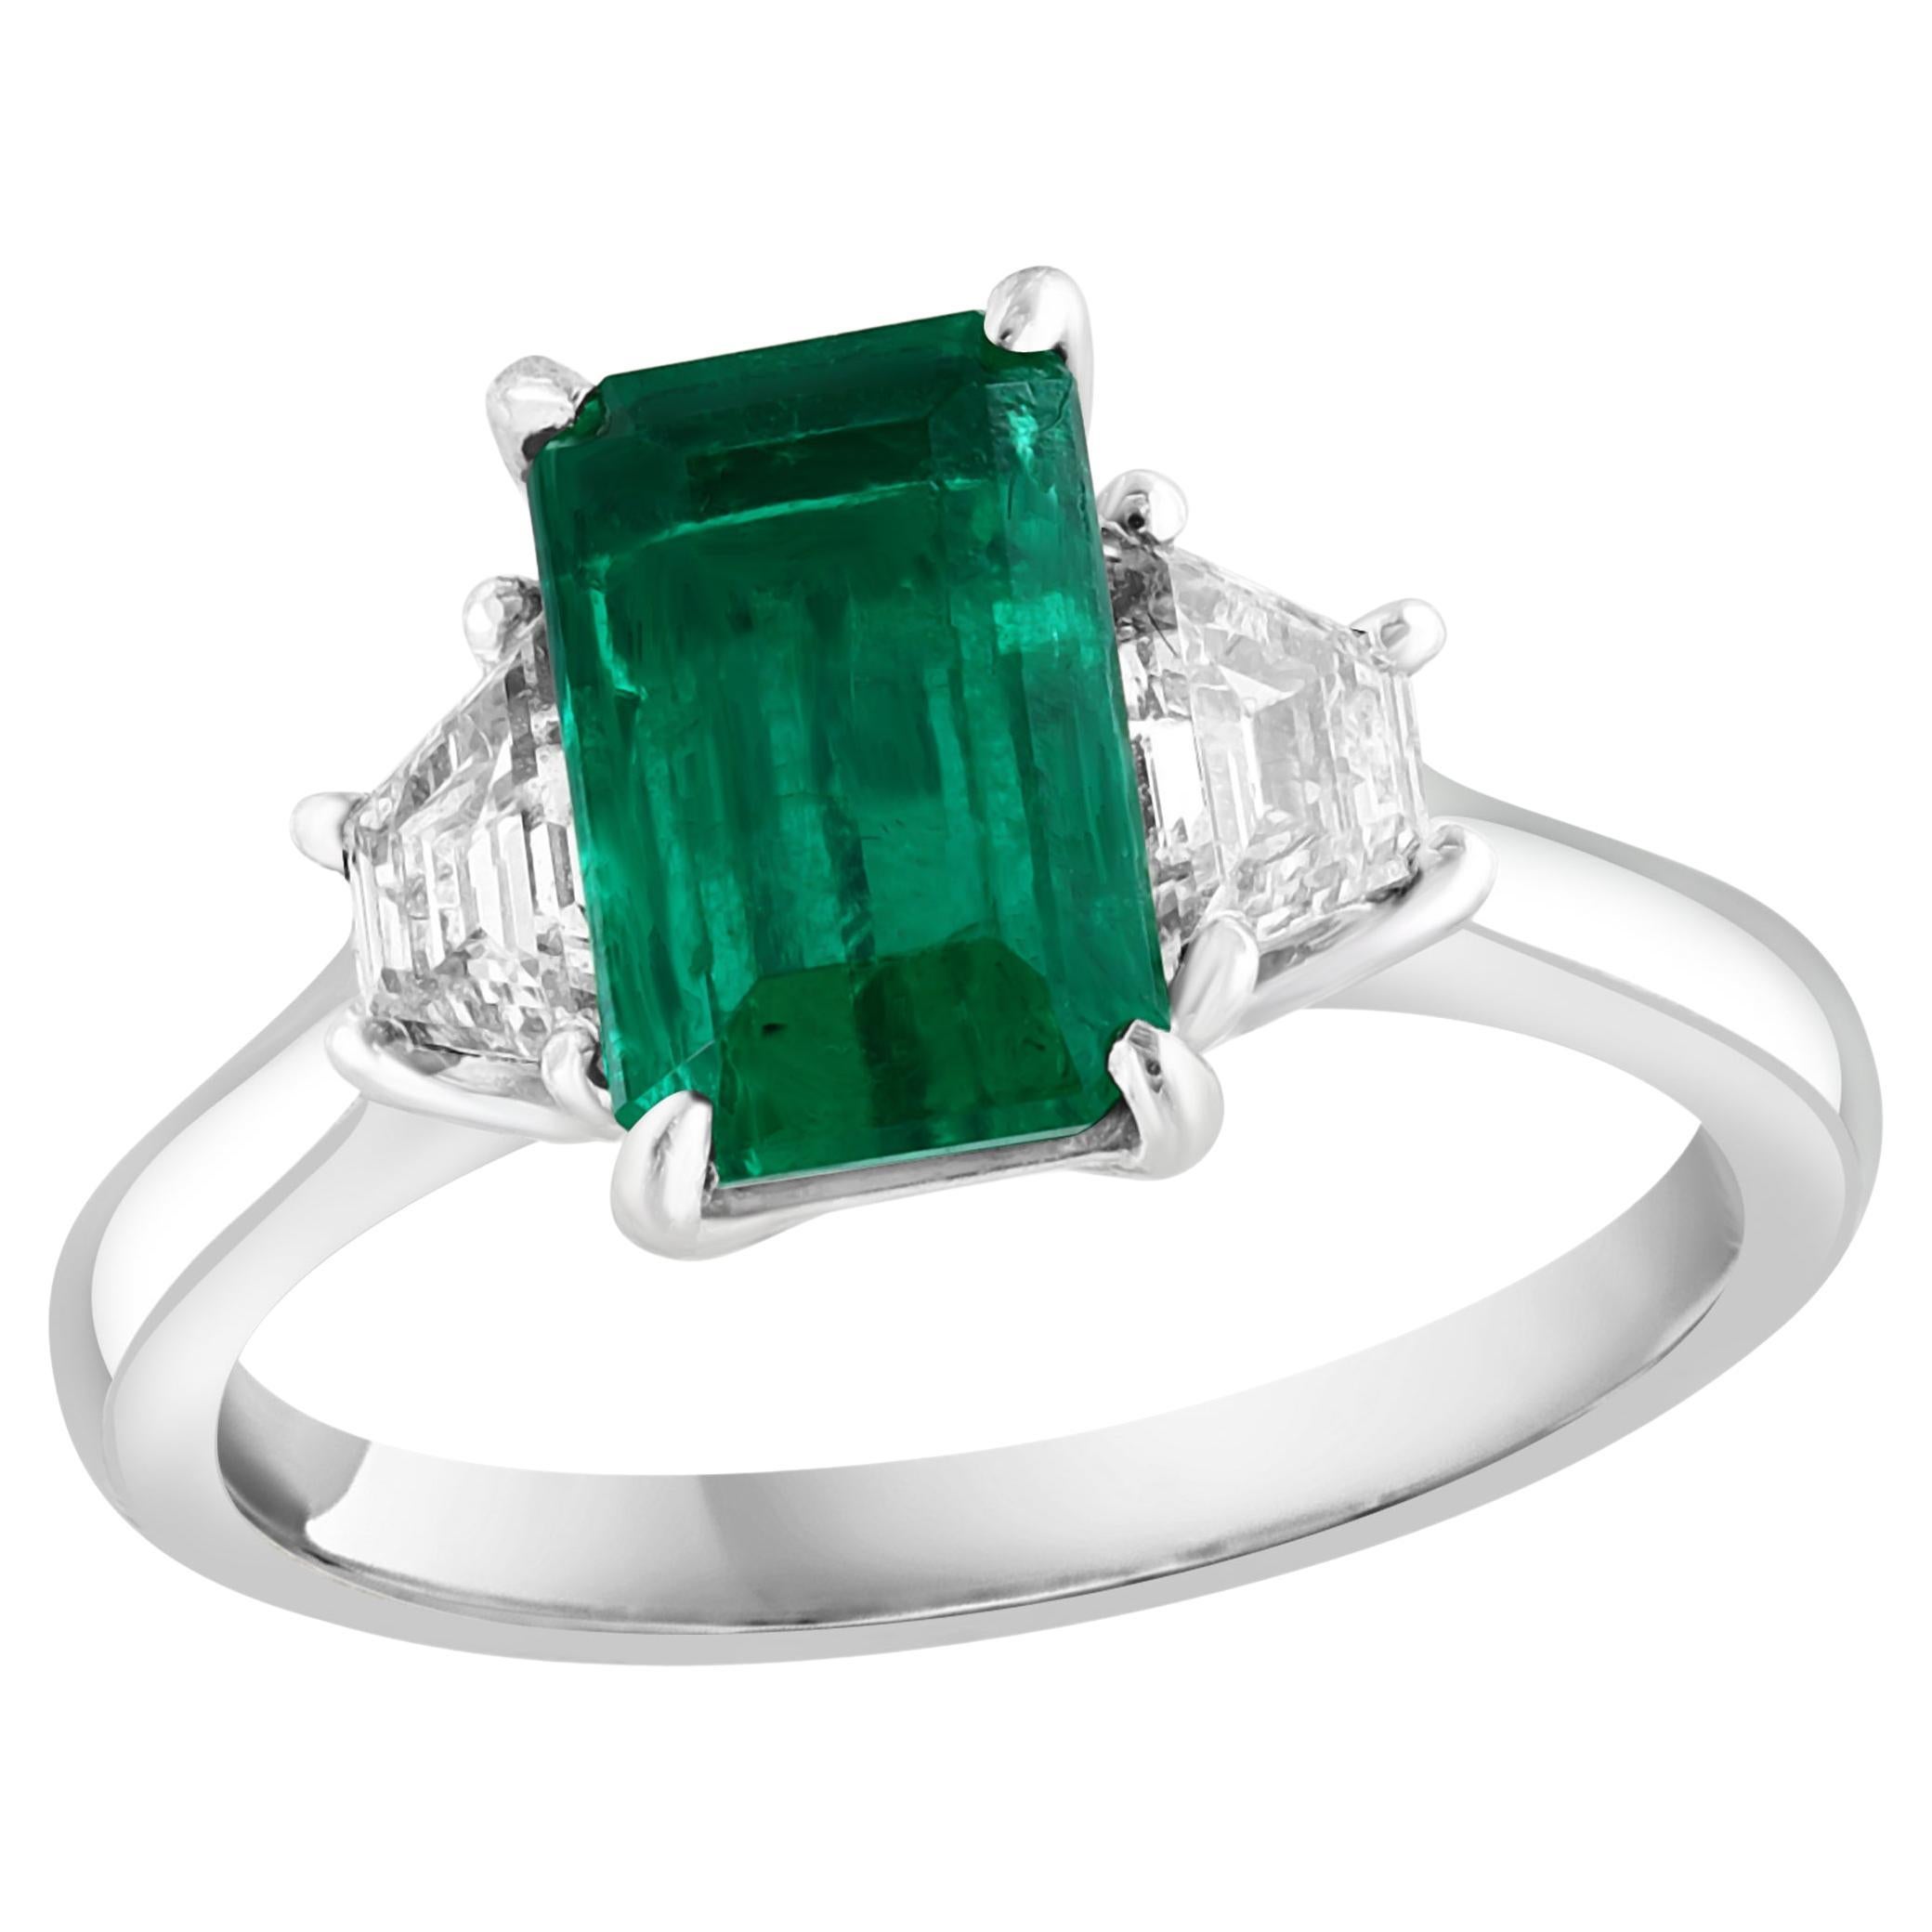 Certified 2.08 Carat Emerald Cut Emerald Diamond Ring in Platinum For Sale